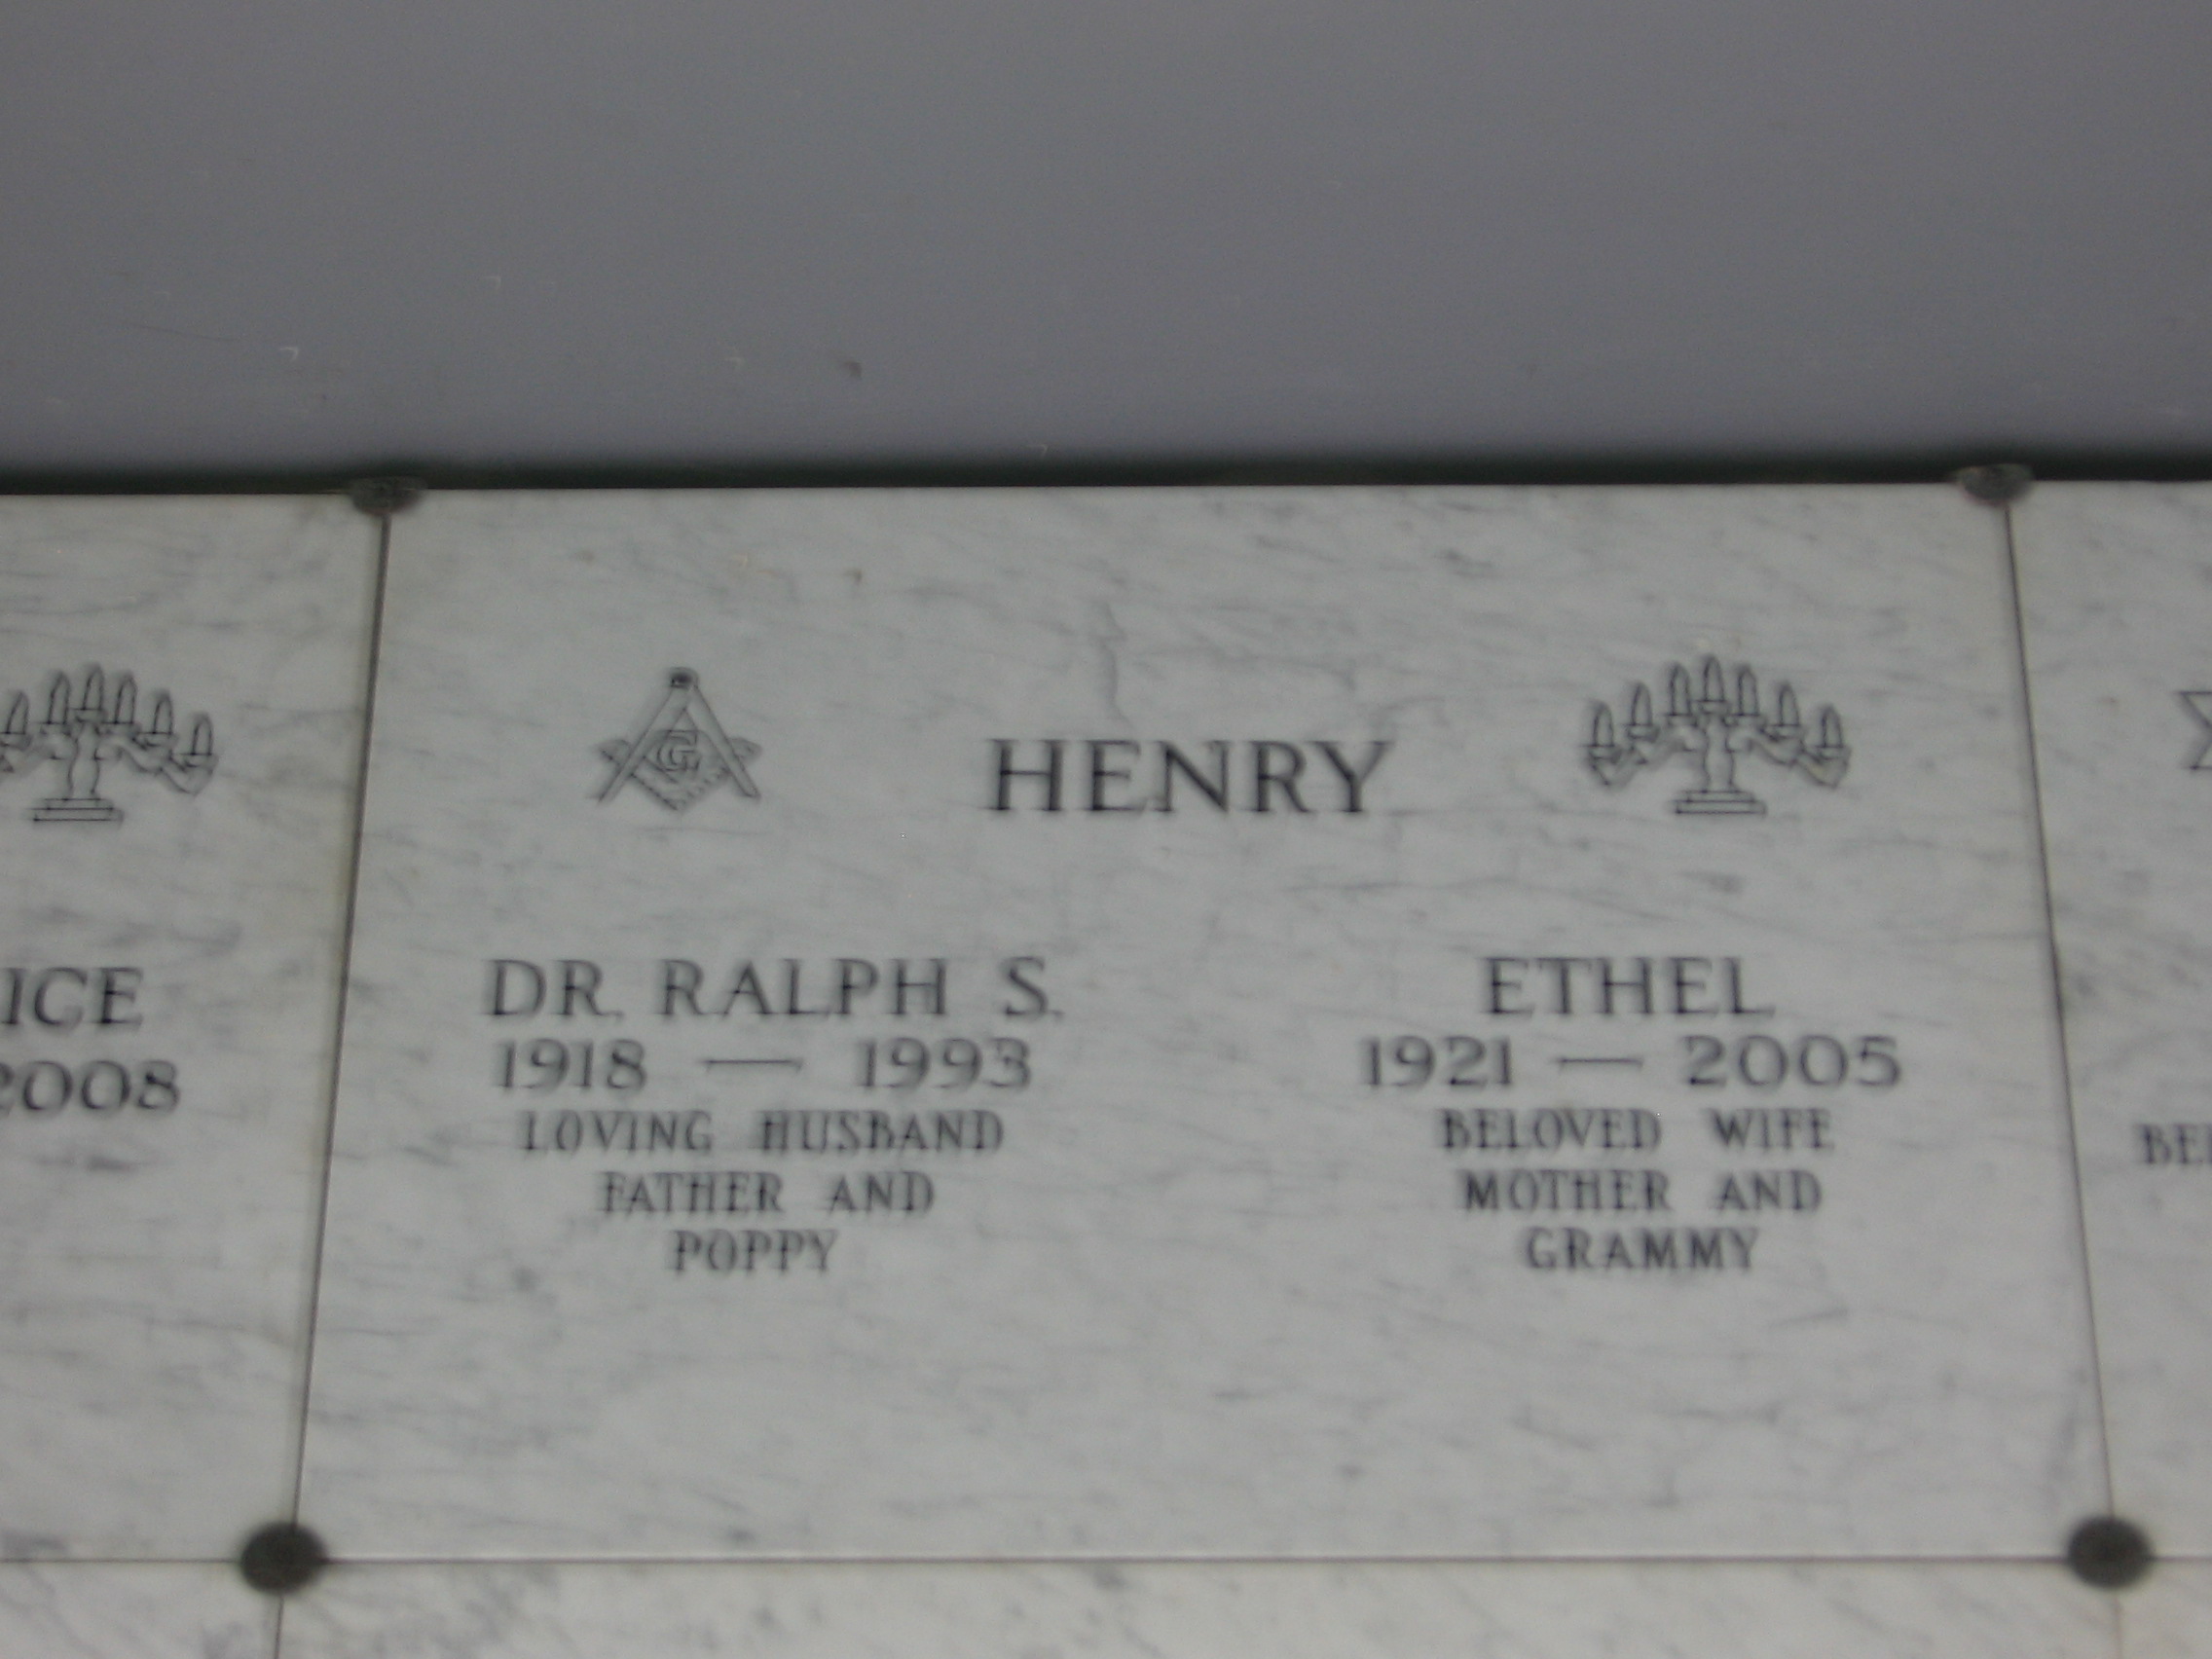 Dr Ralph S Henry